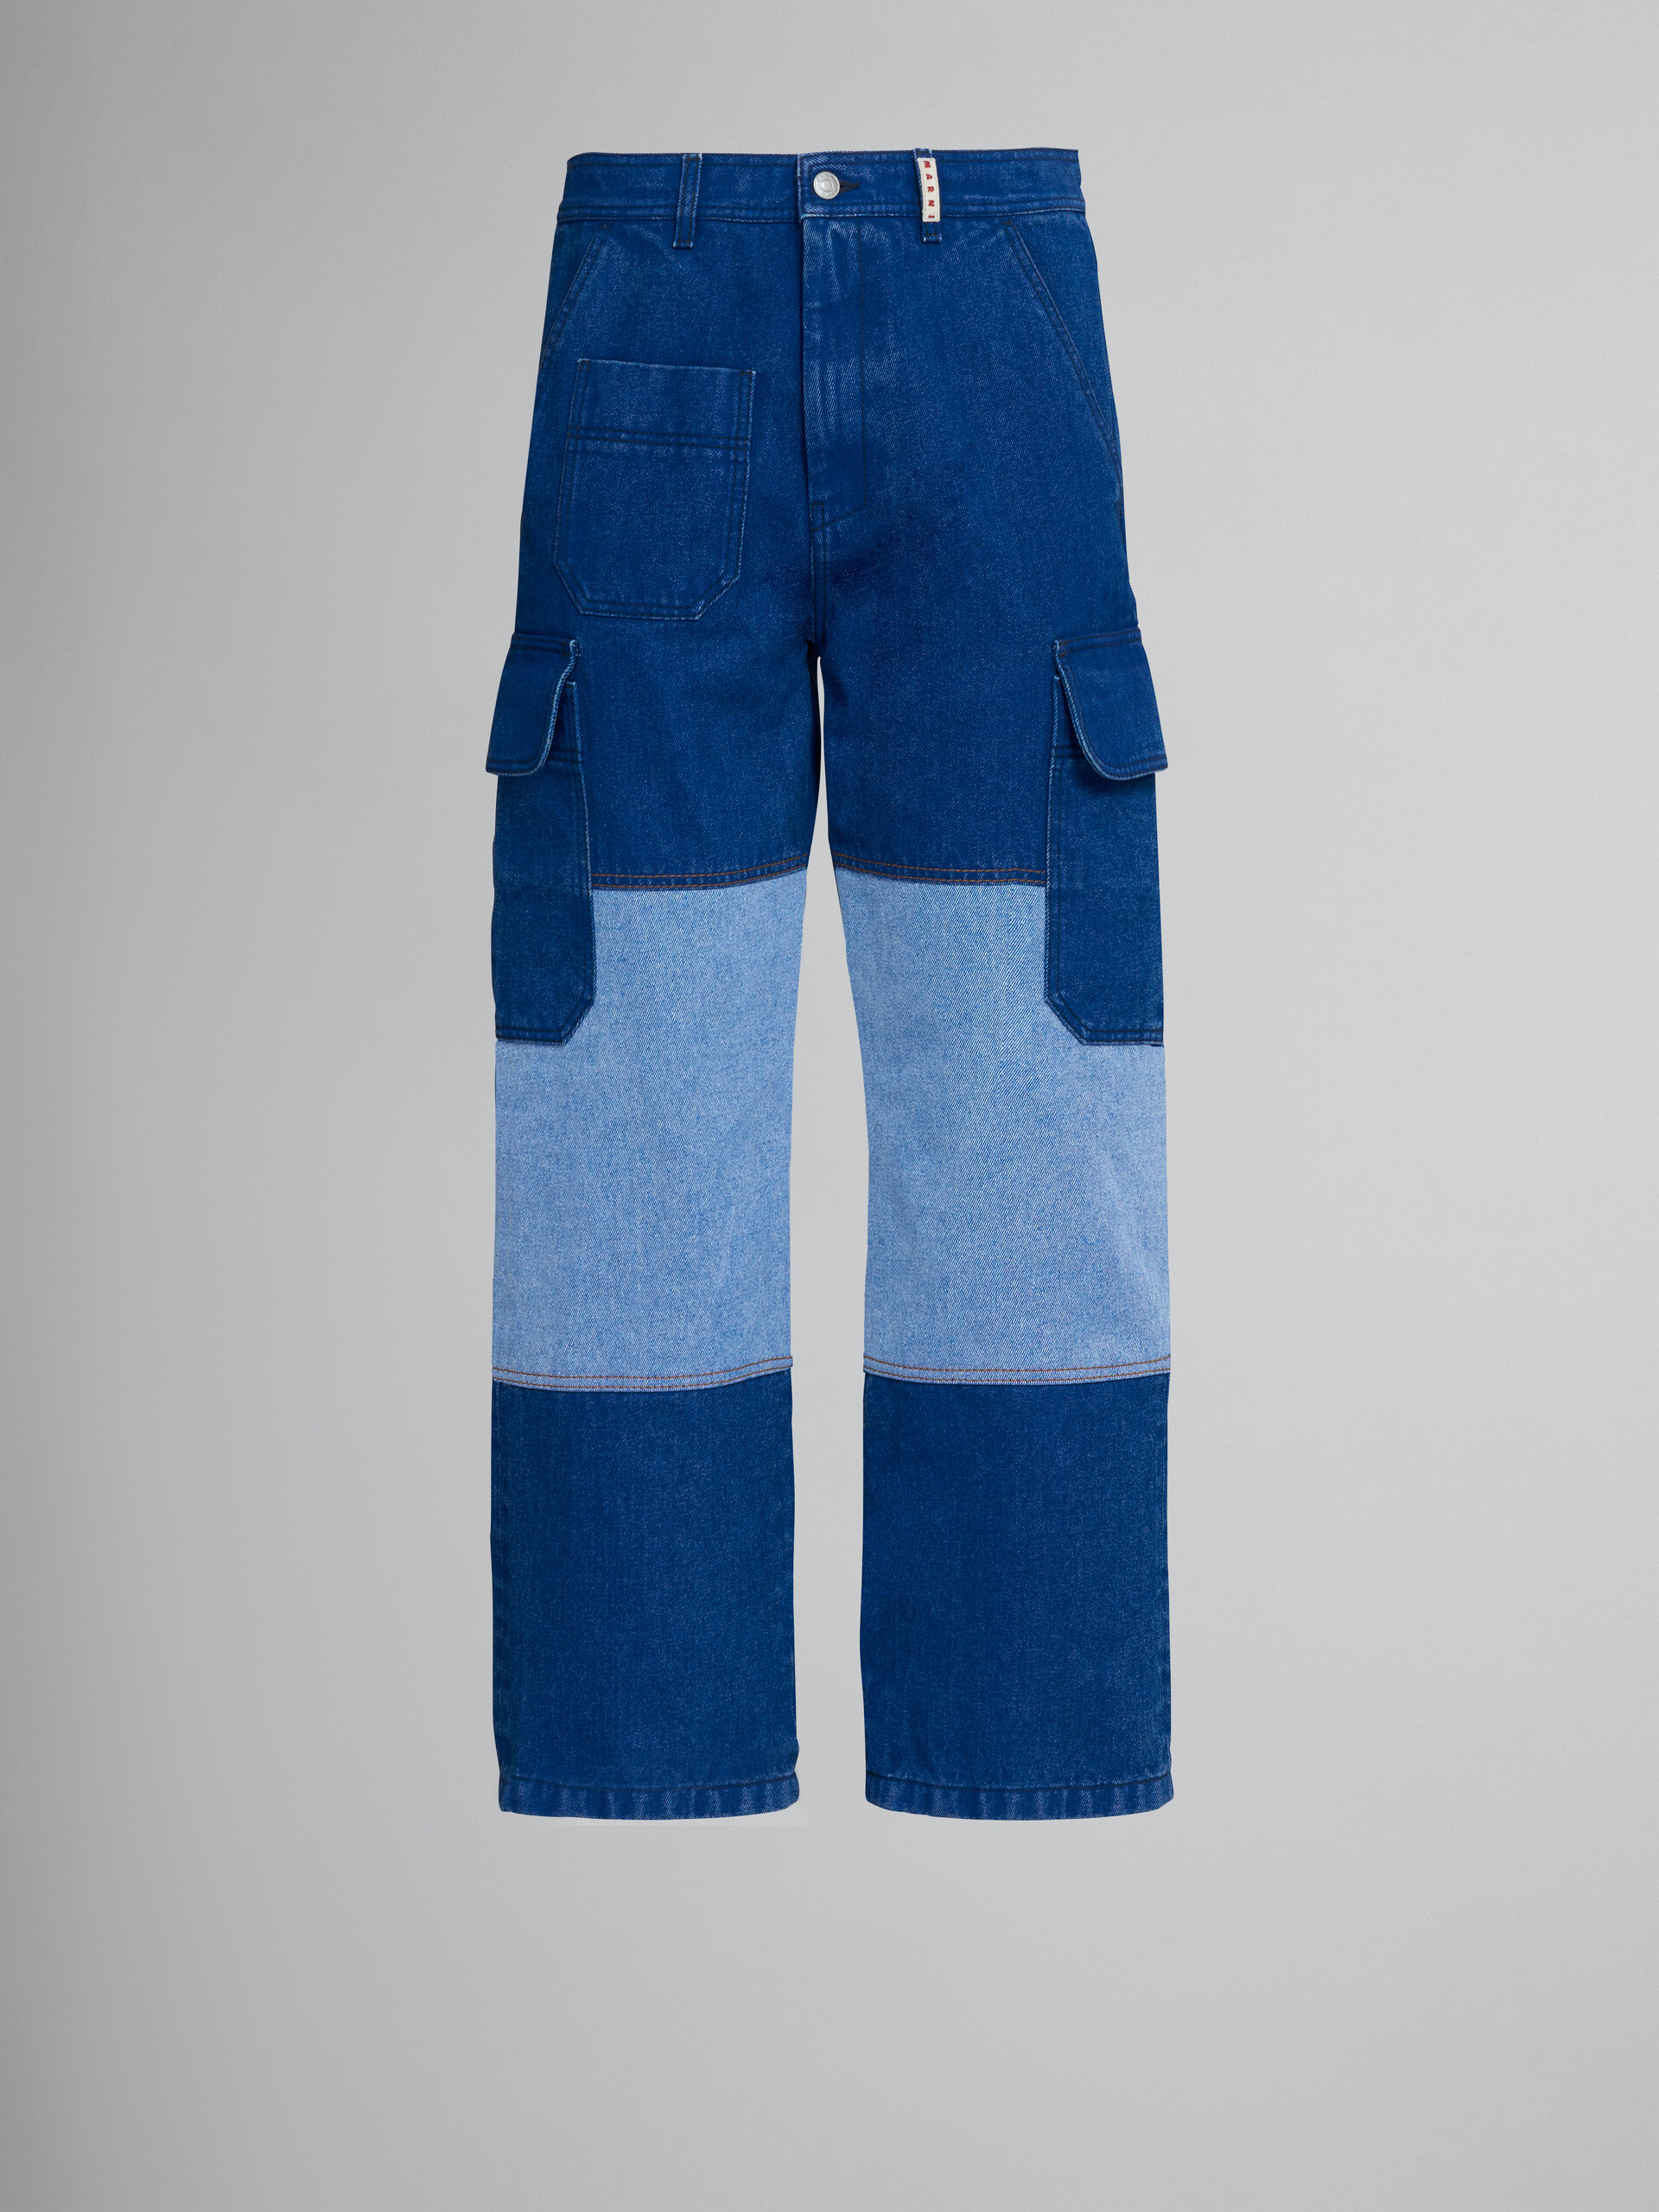 Cargo pants in coated blue denim - Pants - Image 1